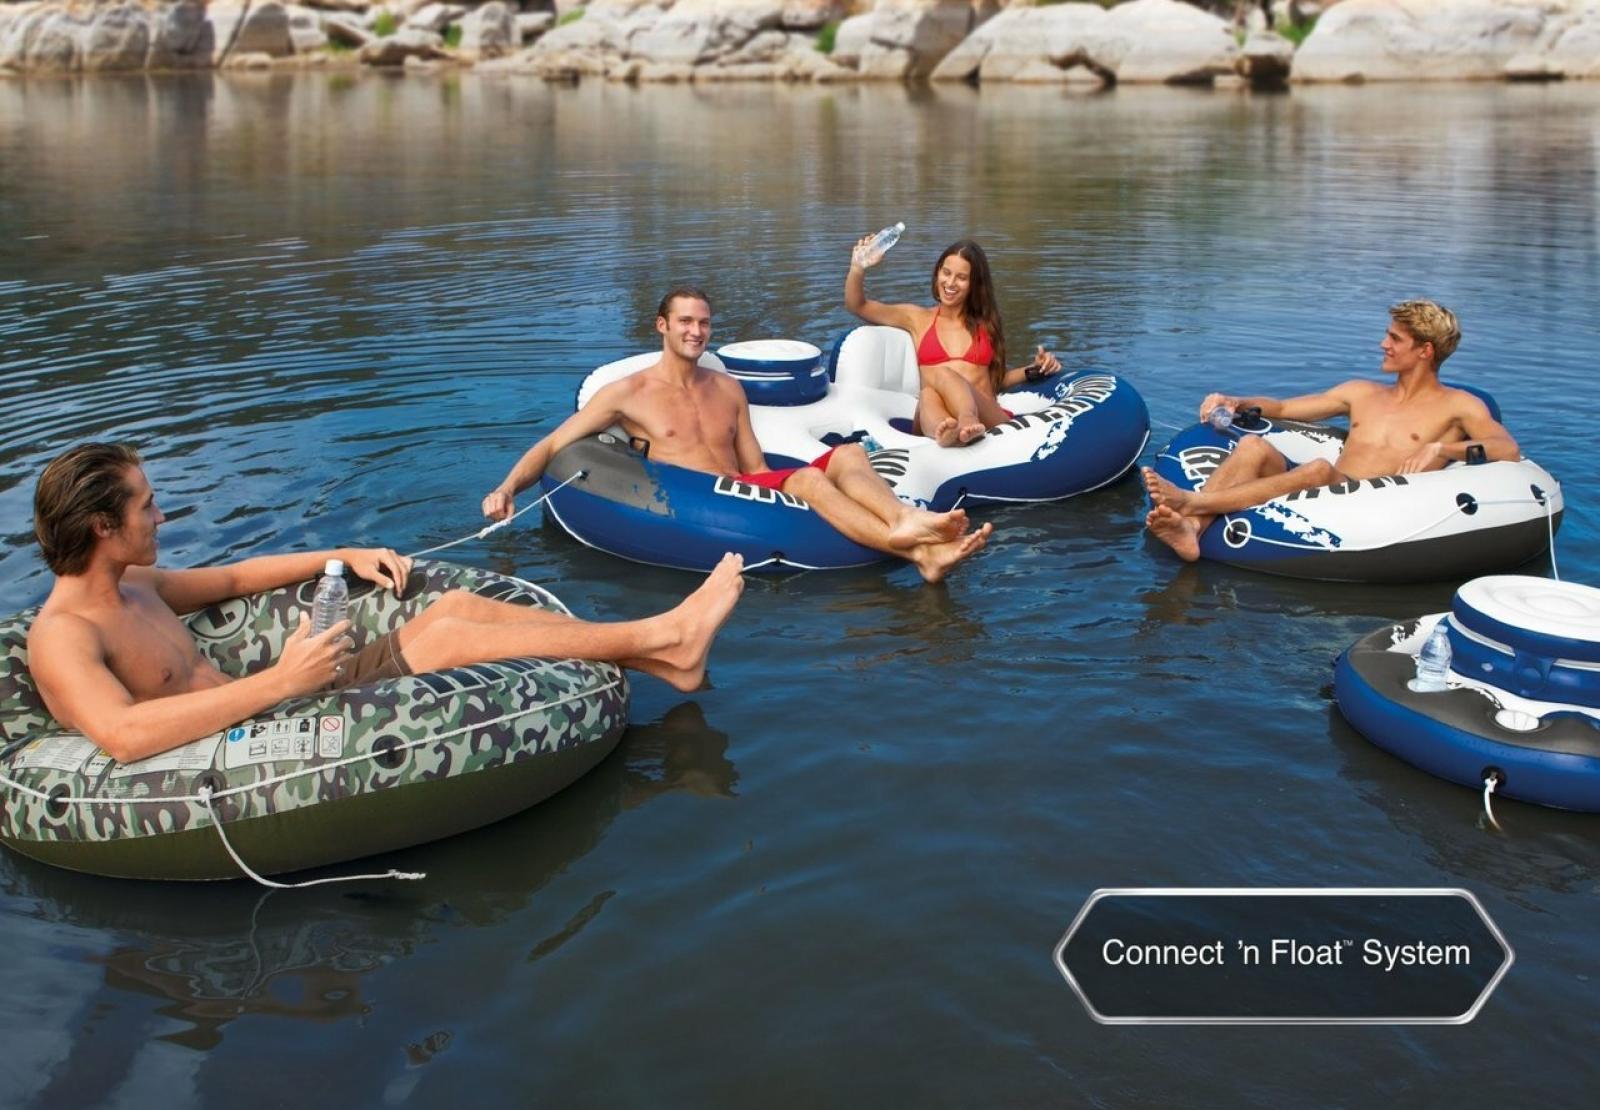 Intex River Run 1 Inflatable Floating Lake Tube